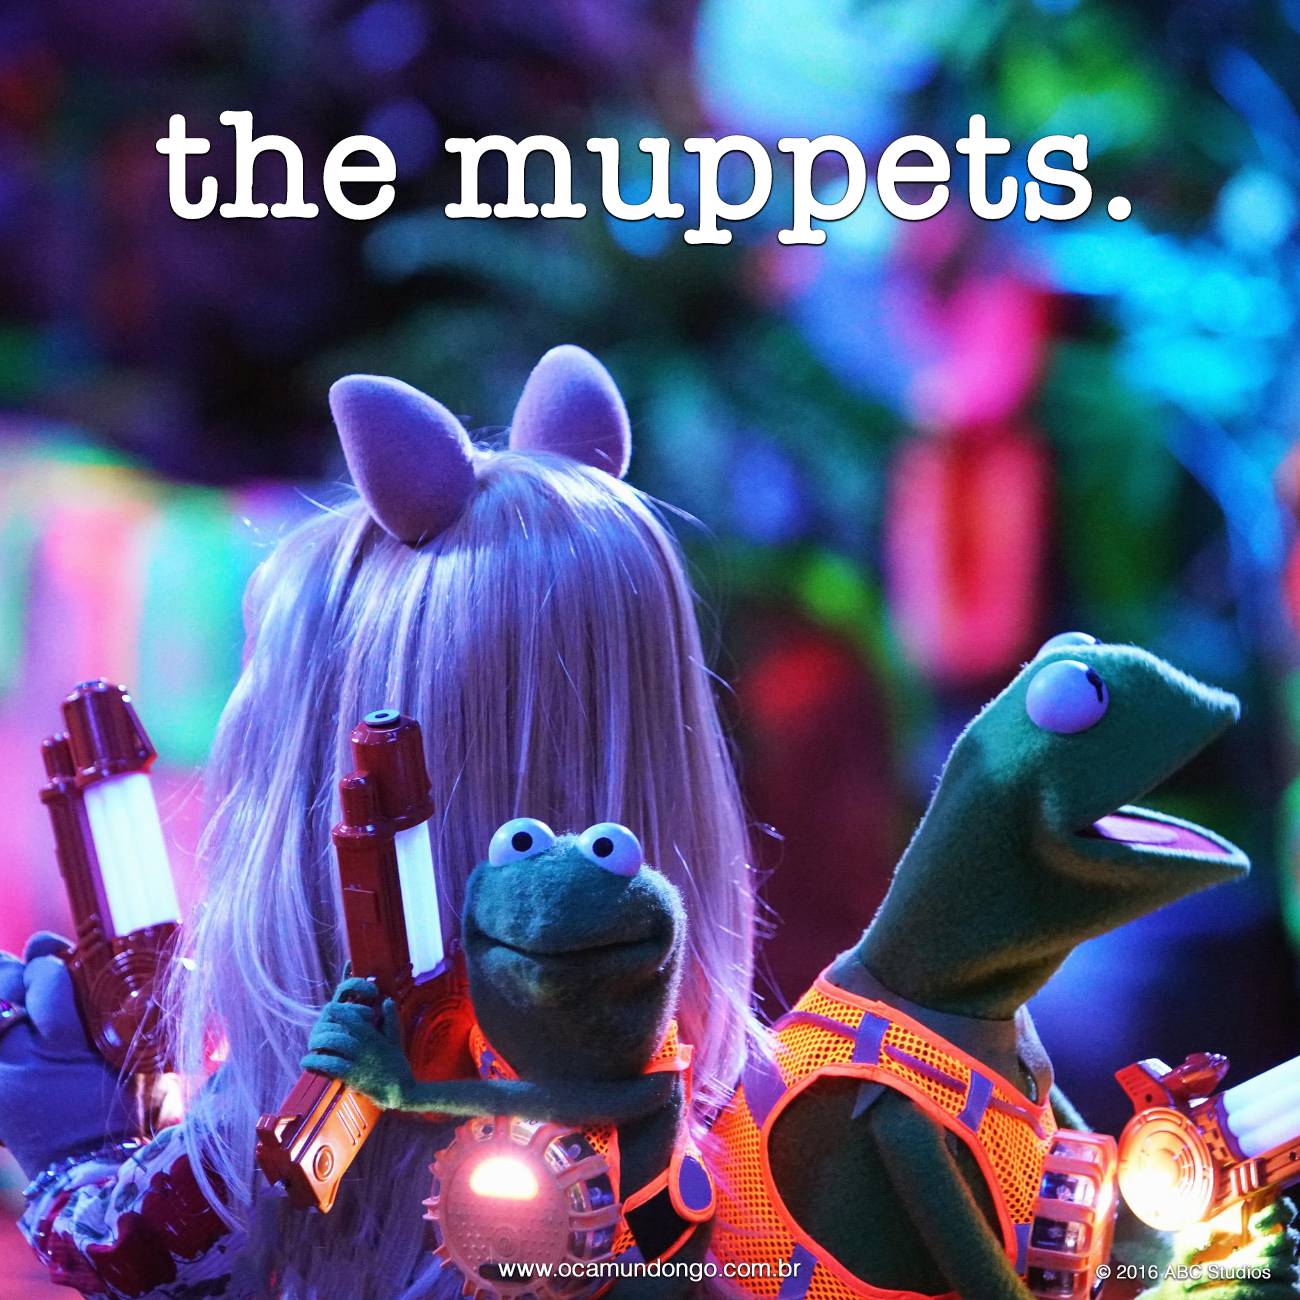 the-muppets-lie-inicio-camundongo